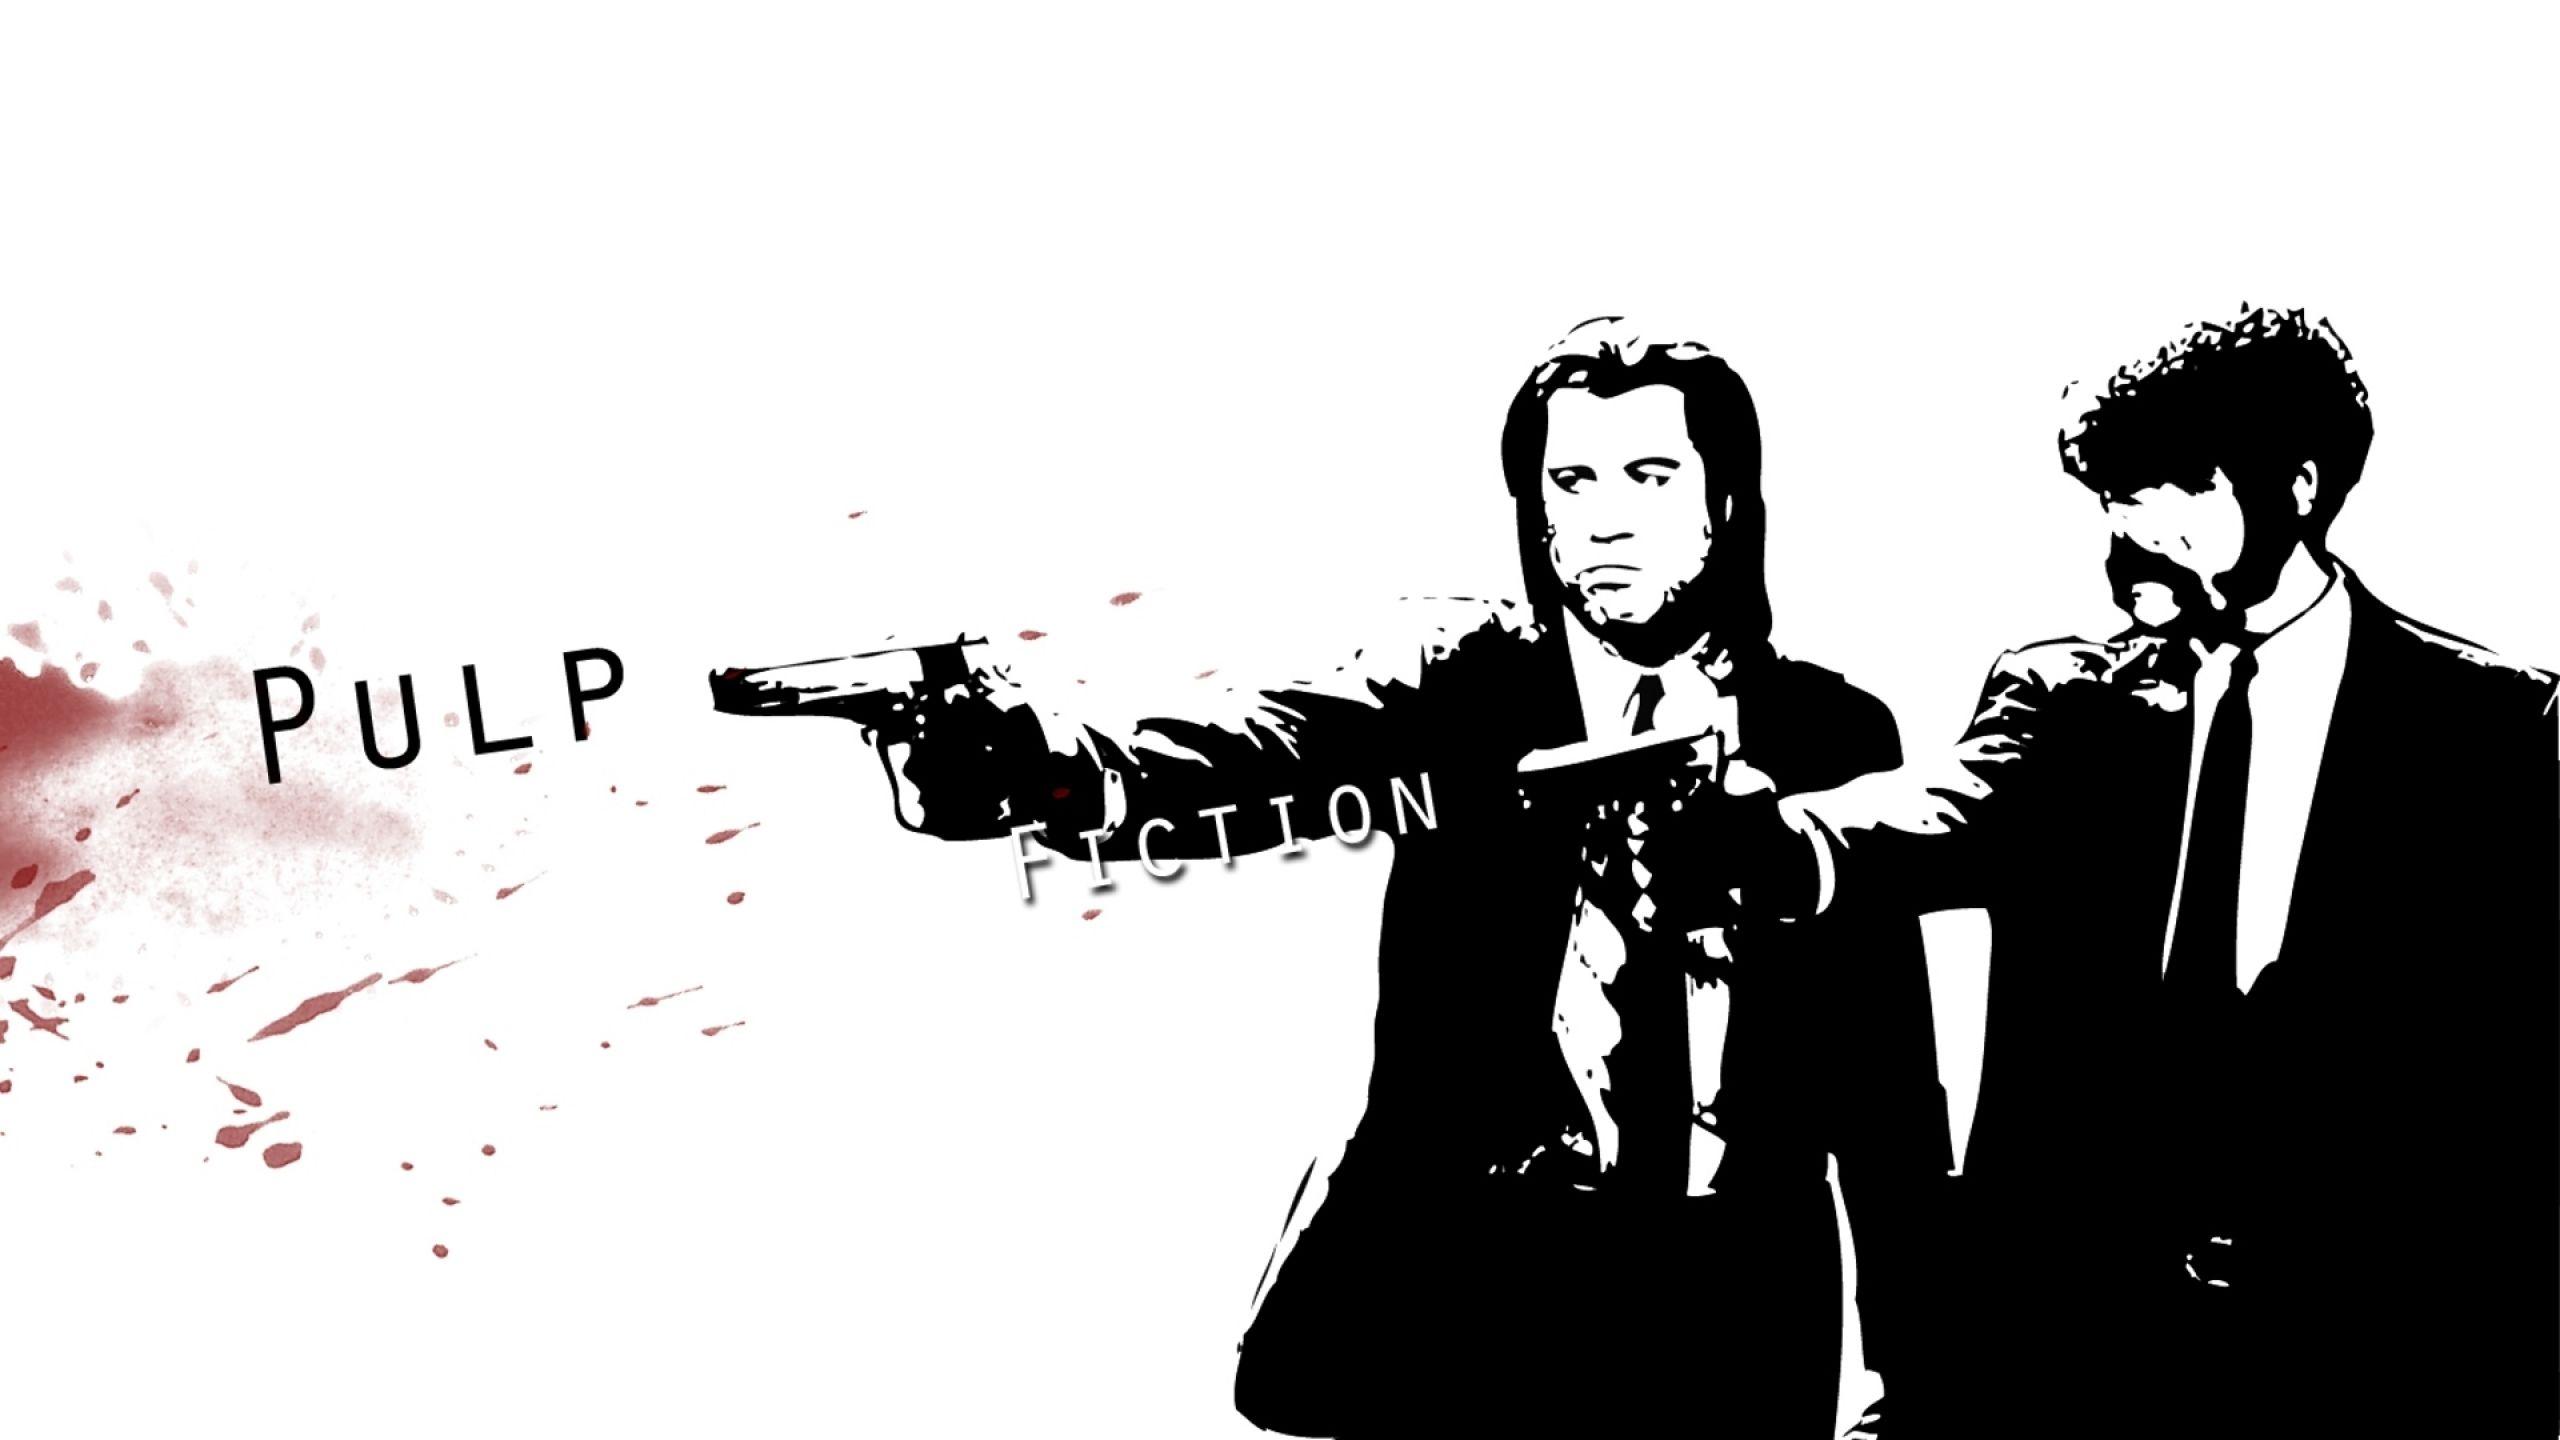 Samuel L. Jackson and John Travolta in Pulp Fiction Wallpaper free